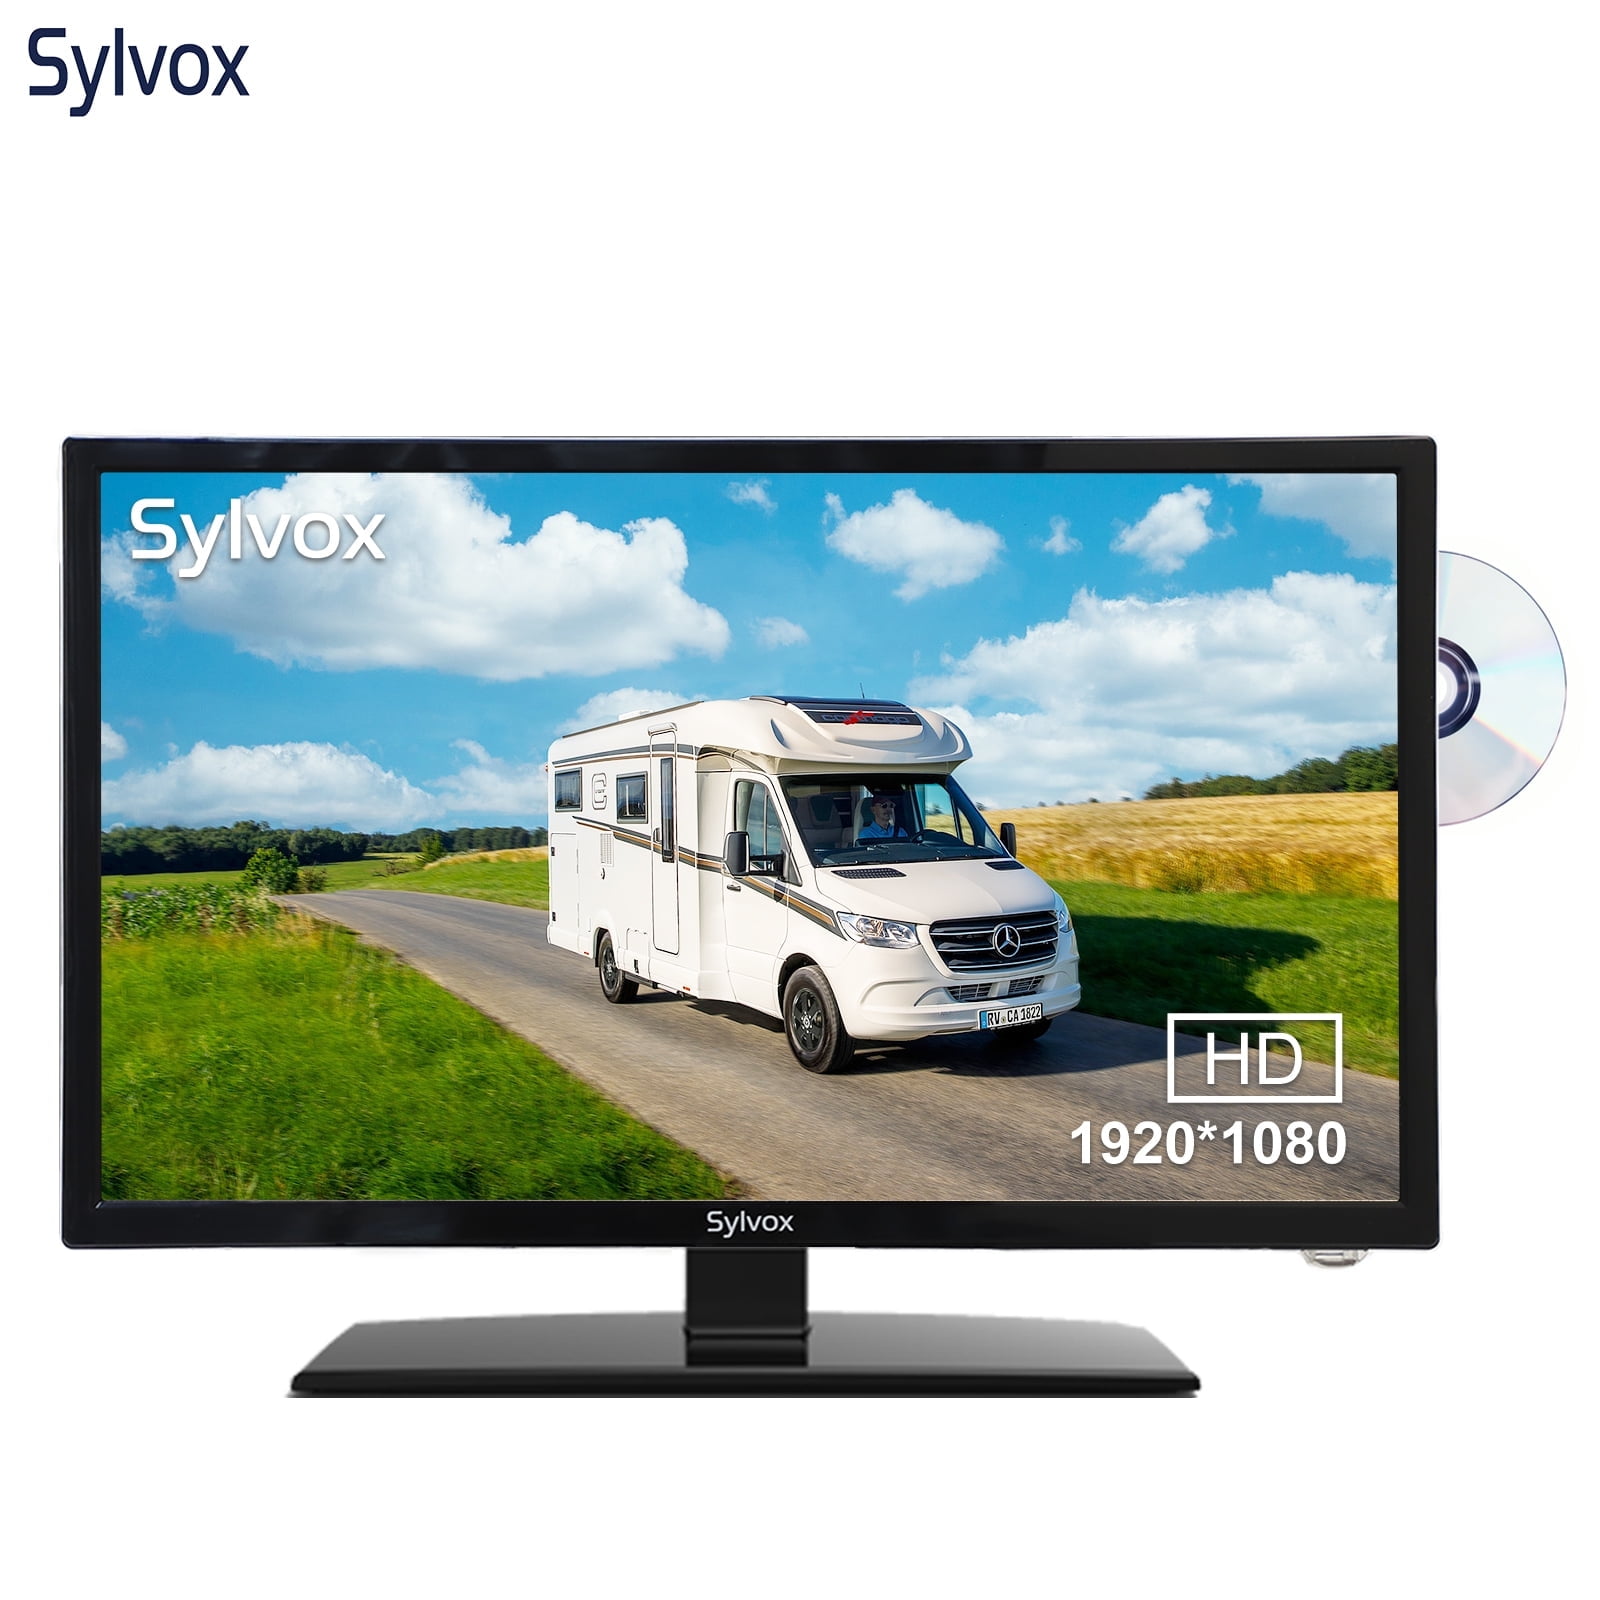 Sylvox 24inch RV TV, 1080p, Built-in DVD Player Speaker FM Radio, 12 Volt  LED TV for with HDMI/USB/AV/VGA Input, Suitable for Motorhome, RV, Caravan  and Boat 